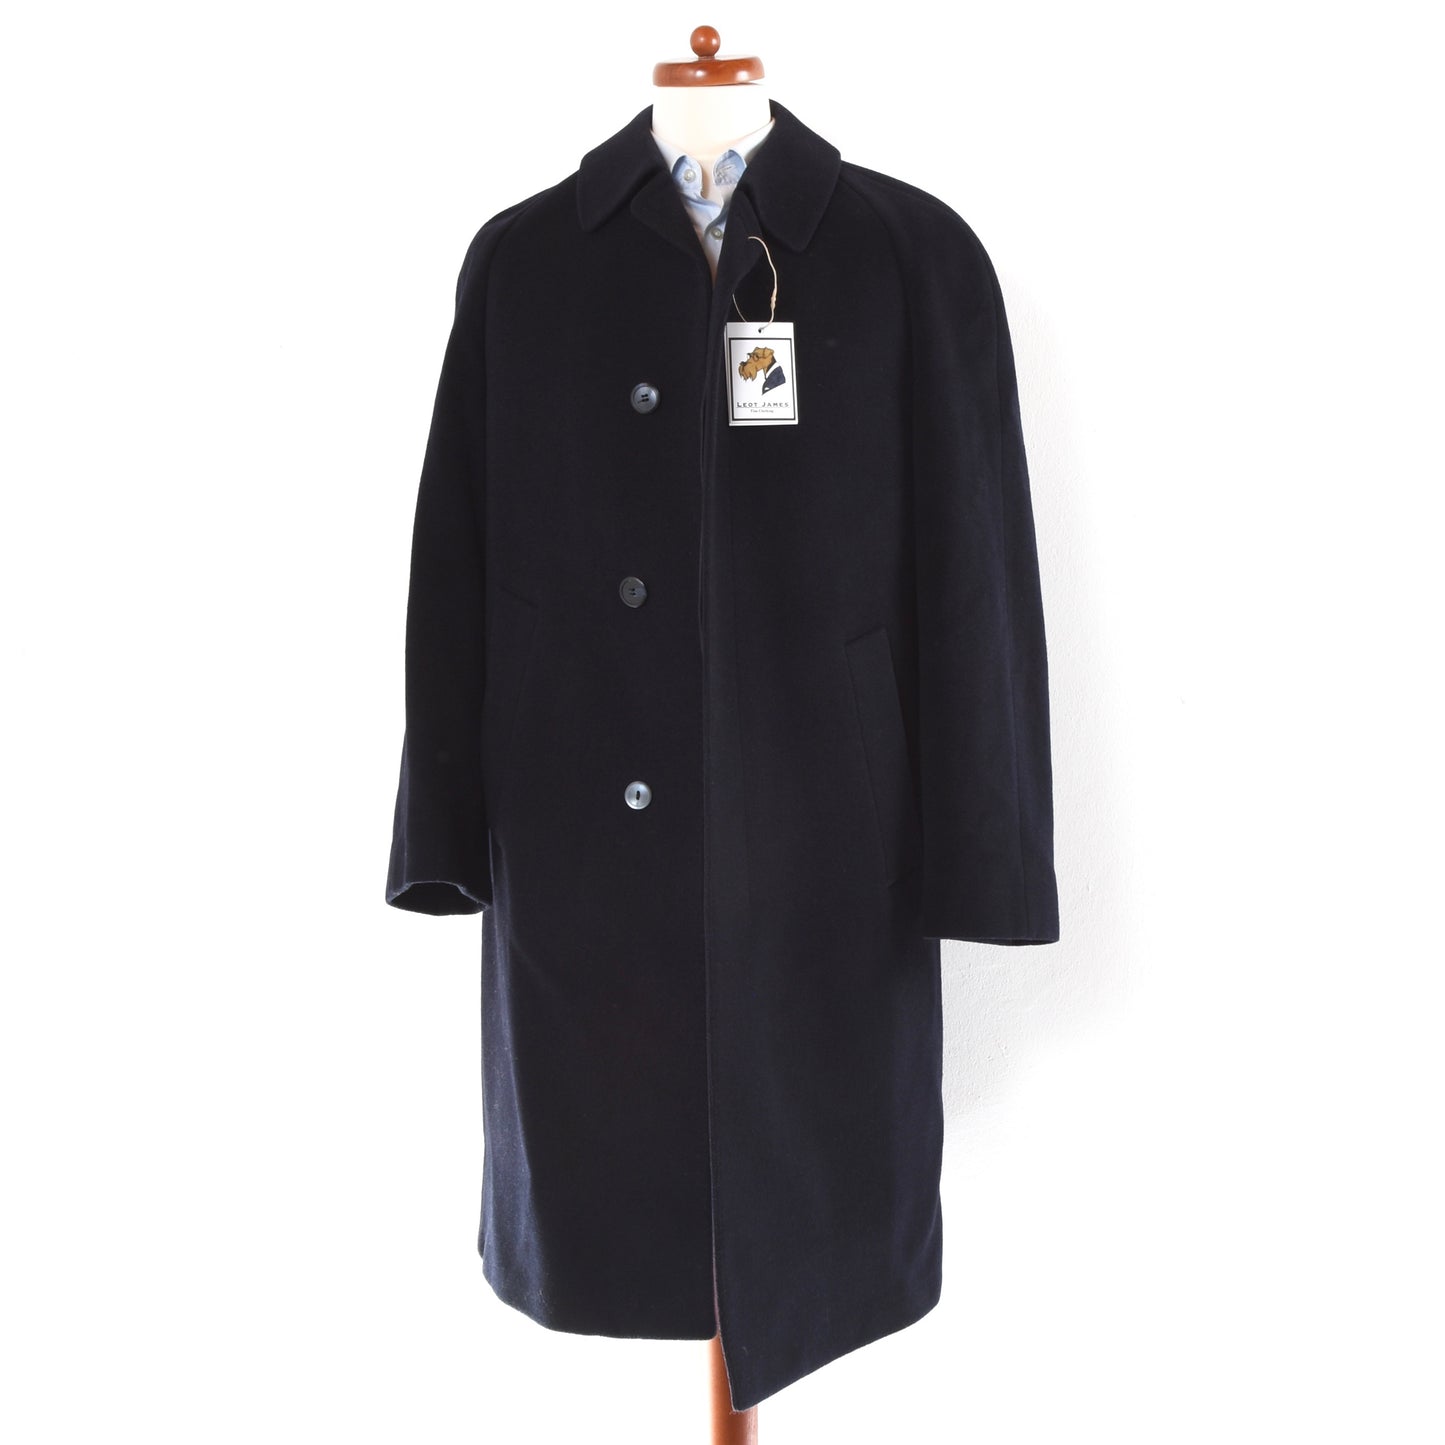 Pefri Modell Wool-Camel Balmacaan Overcoat Size 46  - Navy Blue